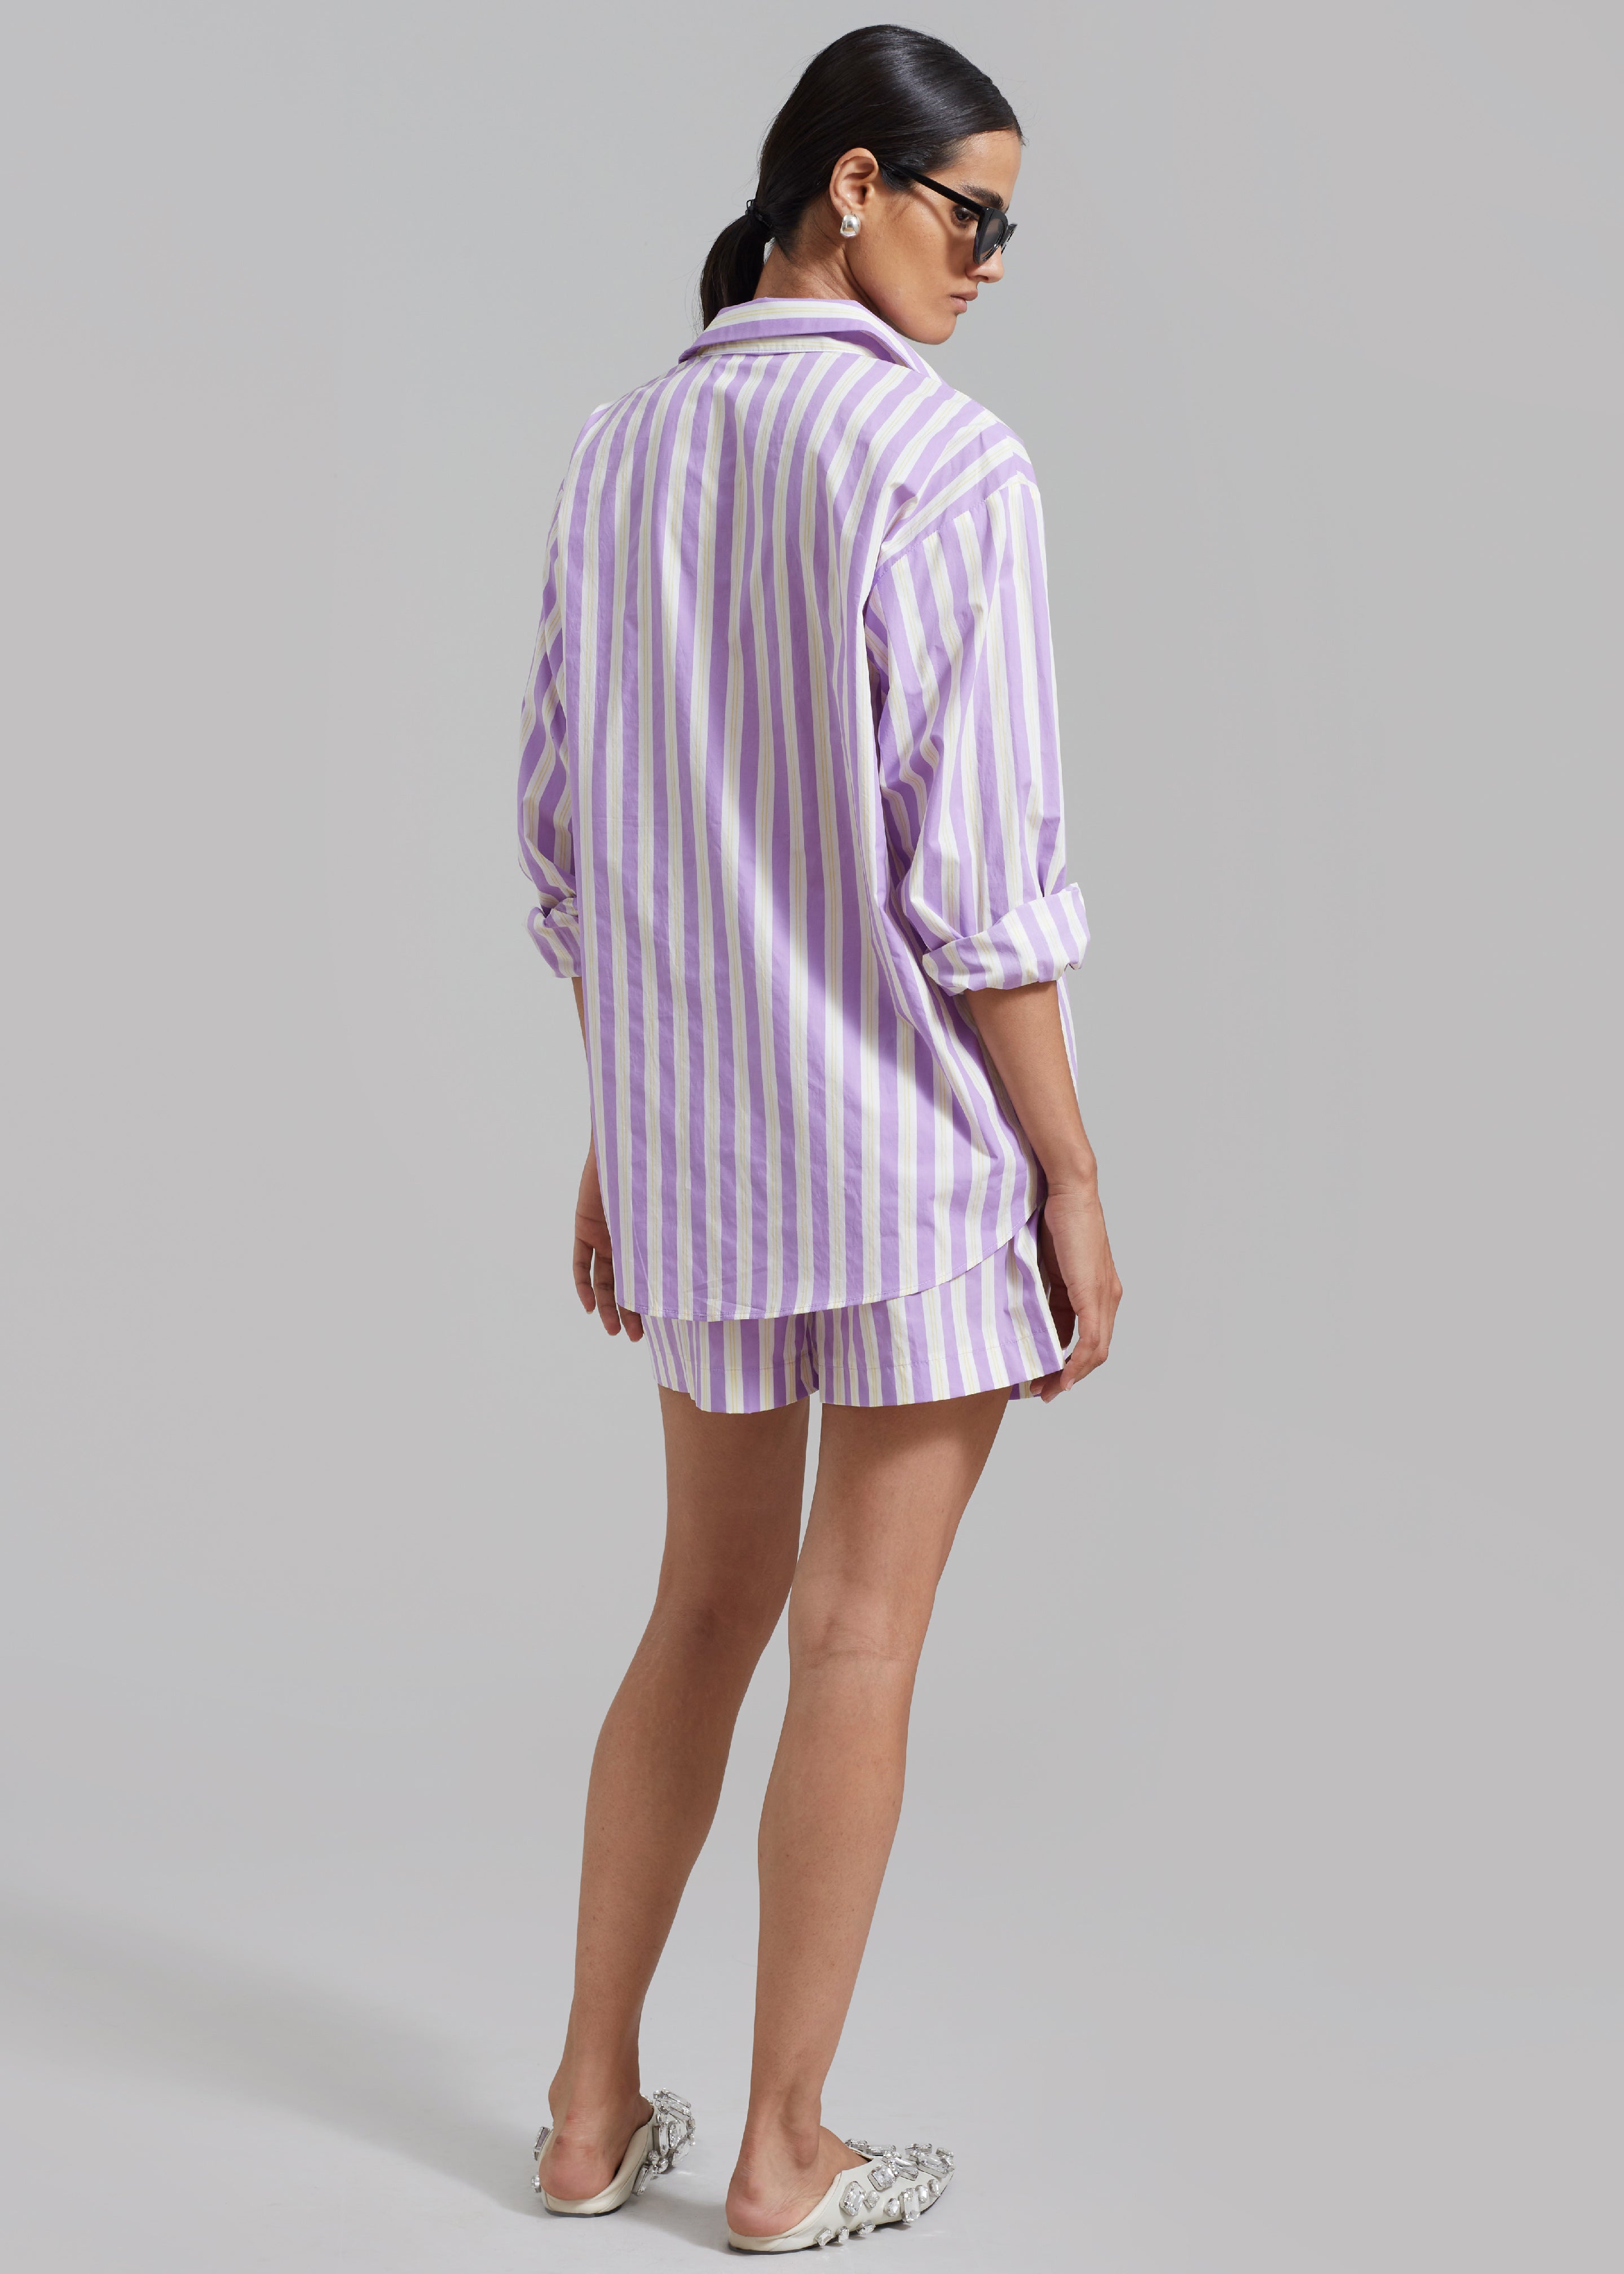 Juno Cotton Shirt - Violet Stripe - 6